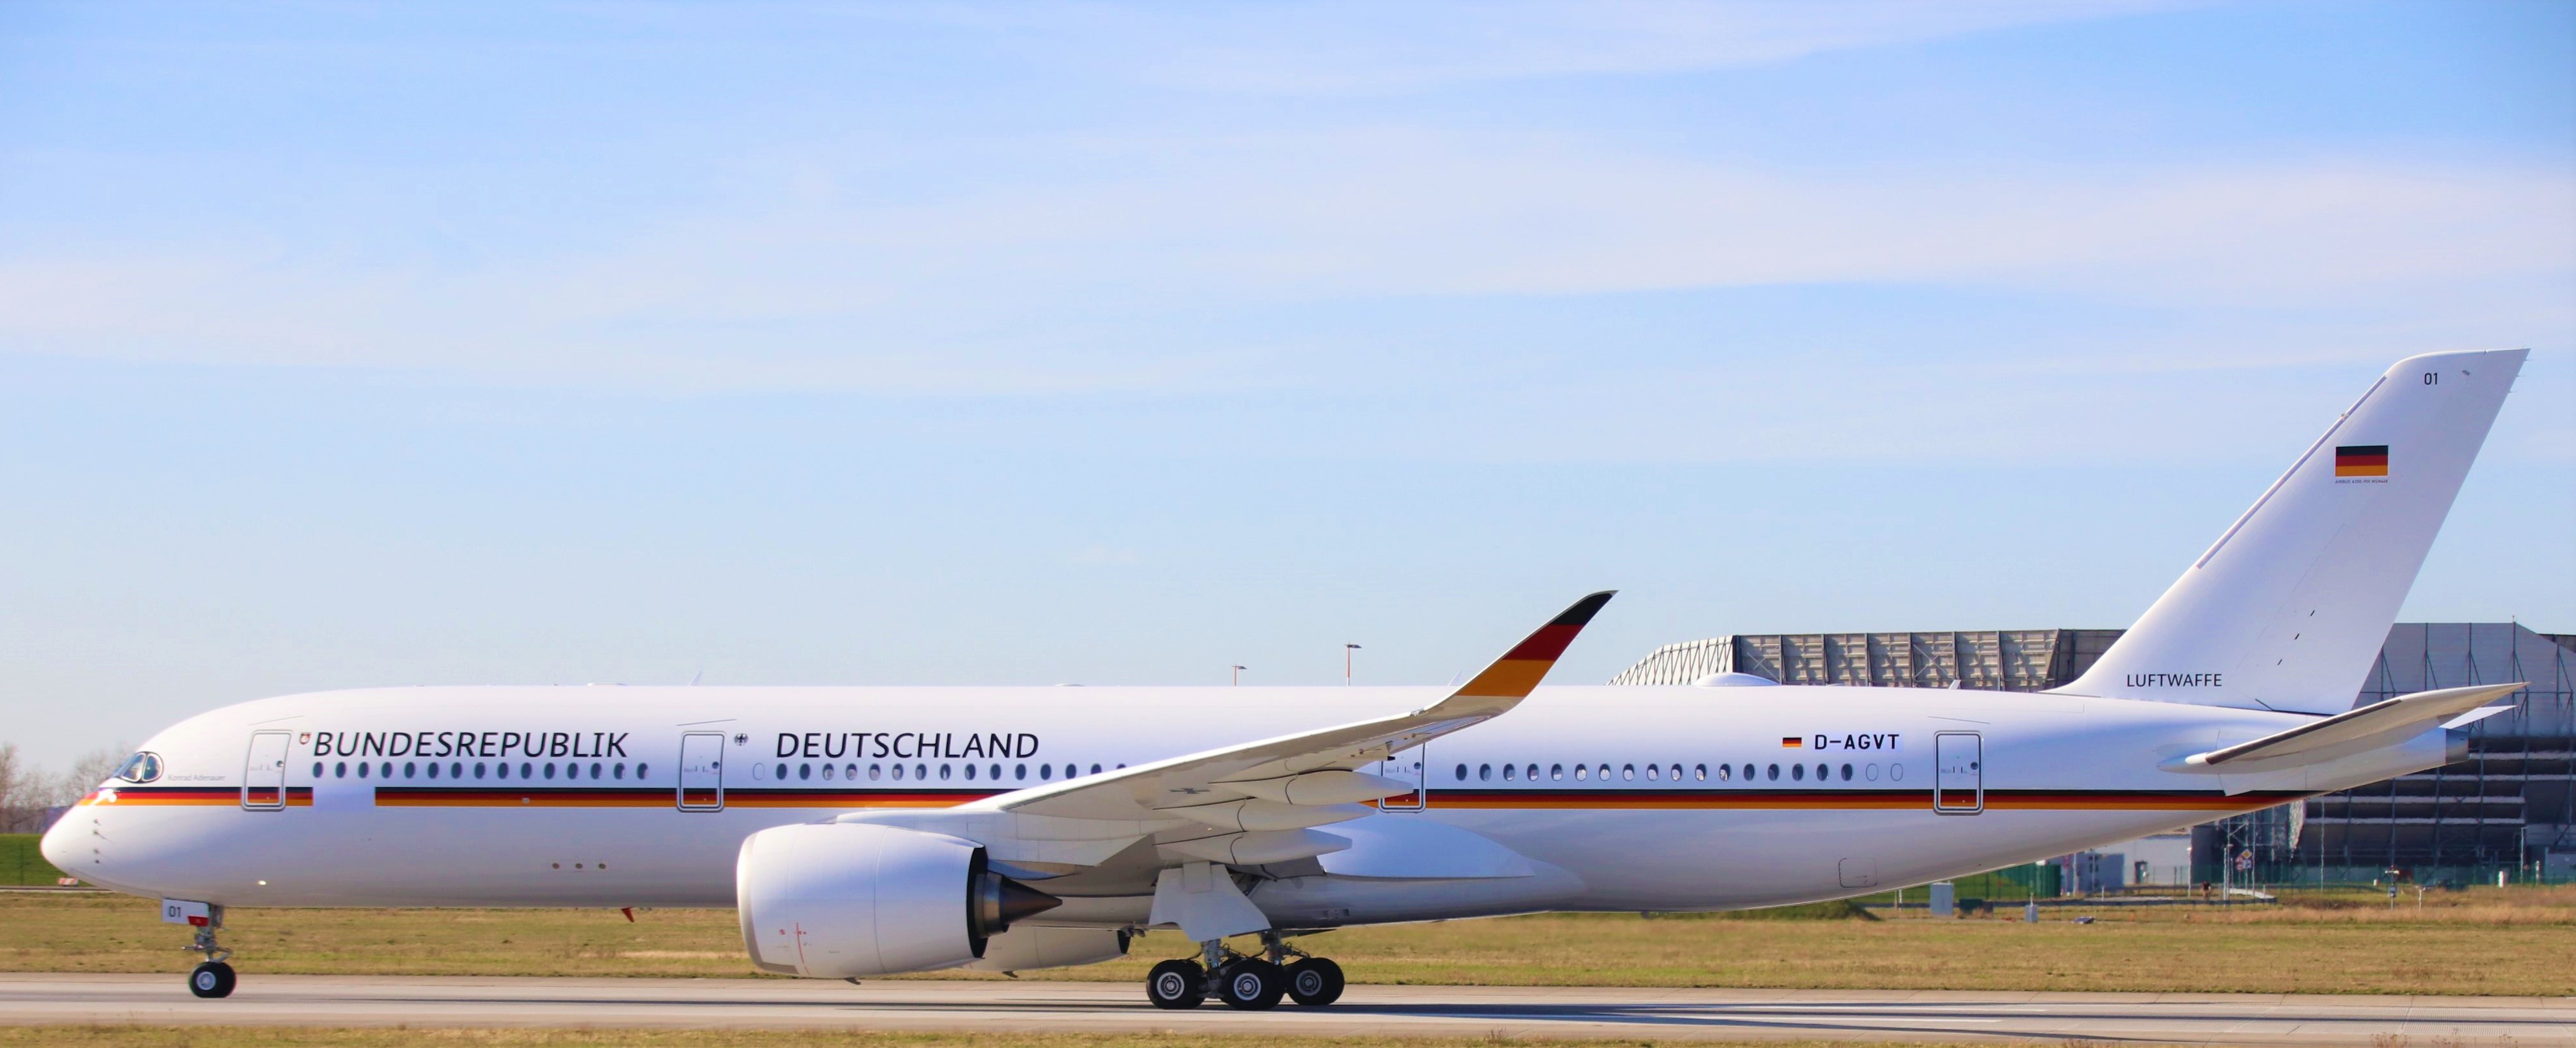 Lufthansa Technik welcomes 10+01 “Konrad Adenauer”  after  Cabin Modificaction  of  A350-900  10+03  “Kurt Schumacher”  Last year .